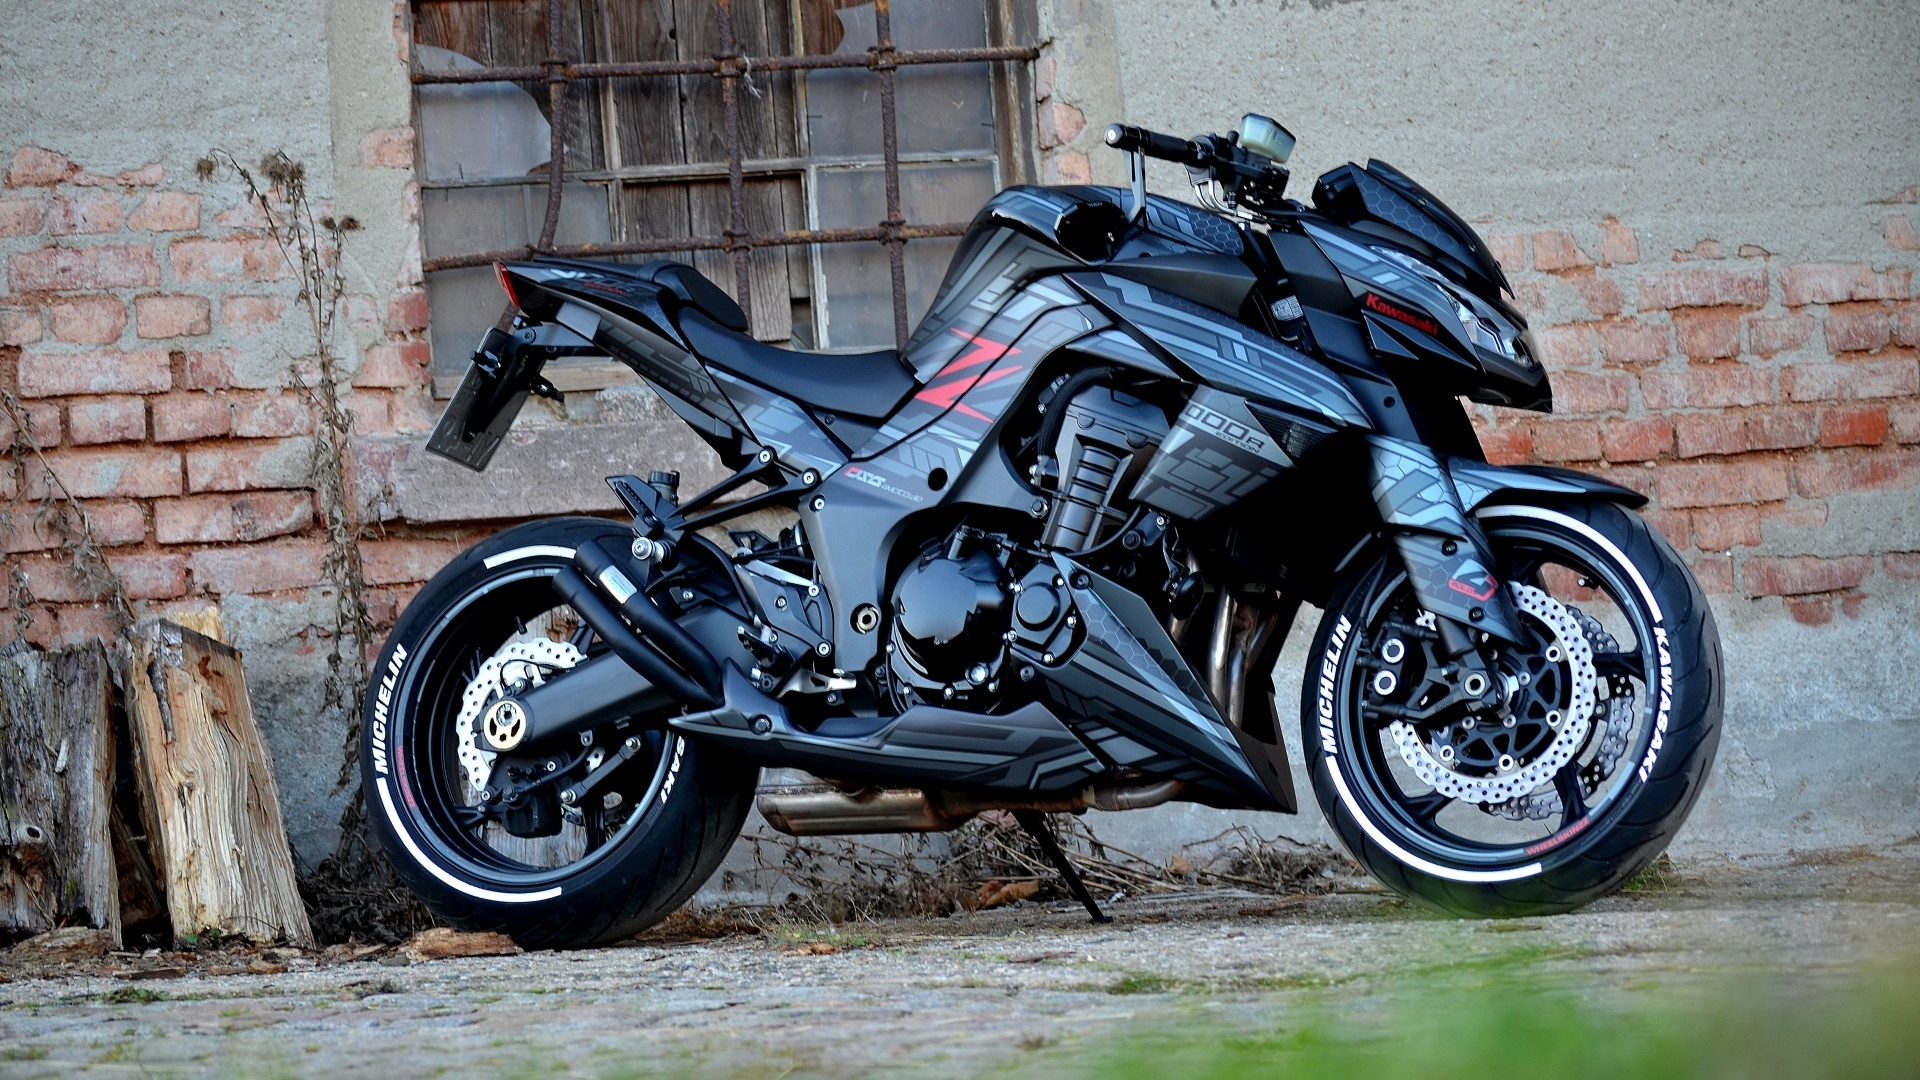 Wallpaper | Motorcycles | photo | picture | kawasaki, Z1000, motorcycle,  the bike